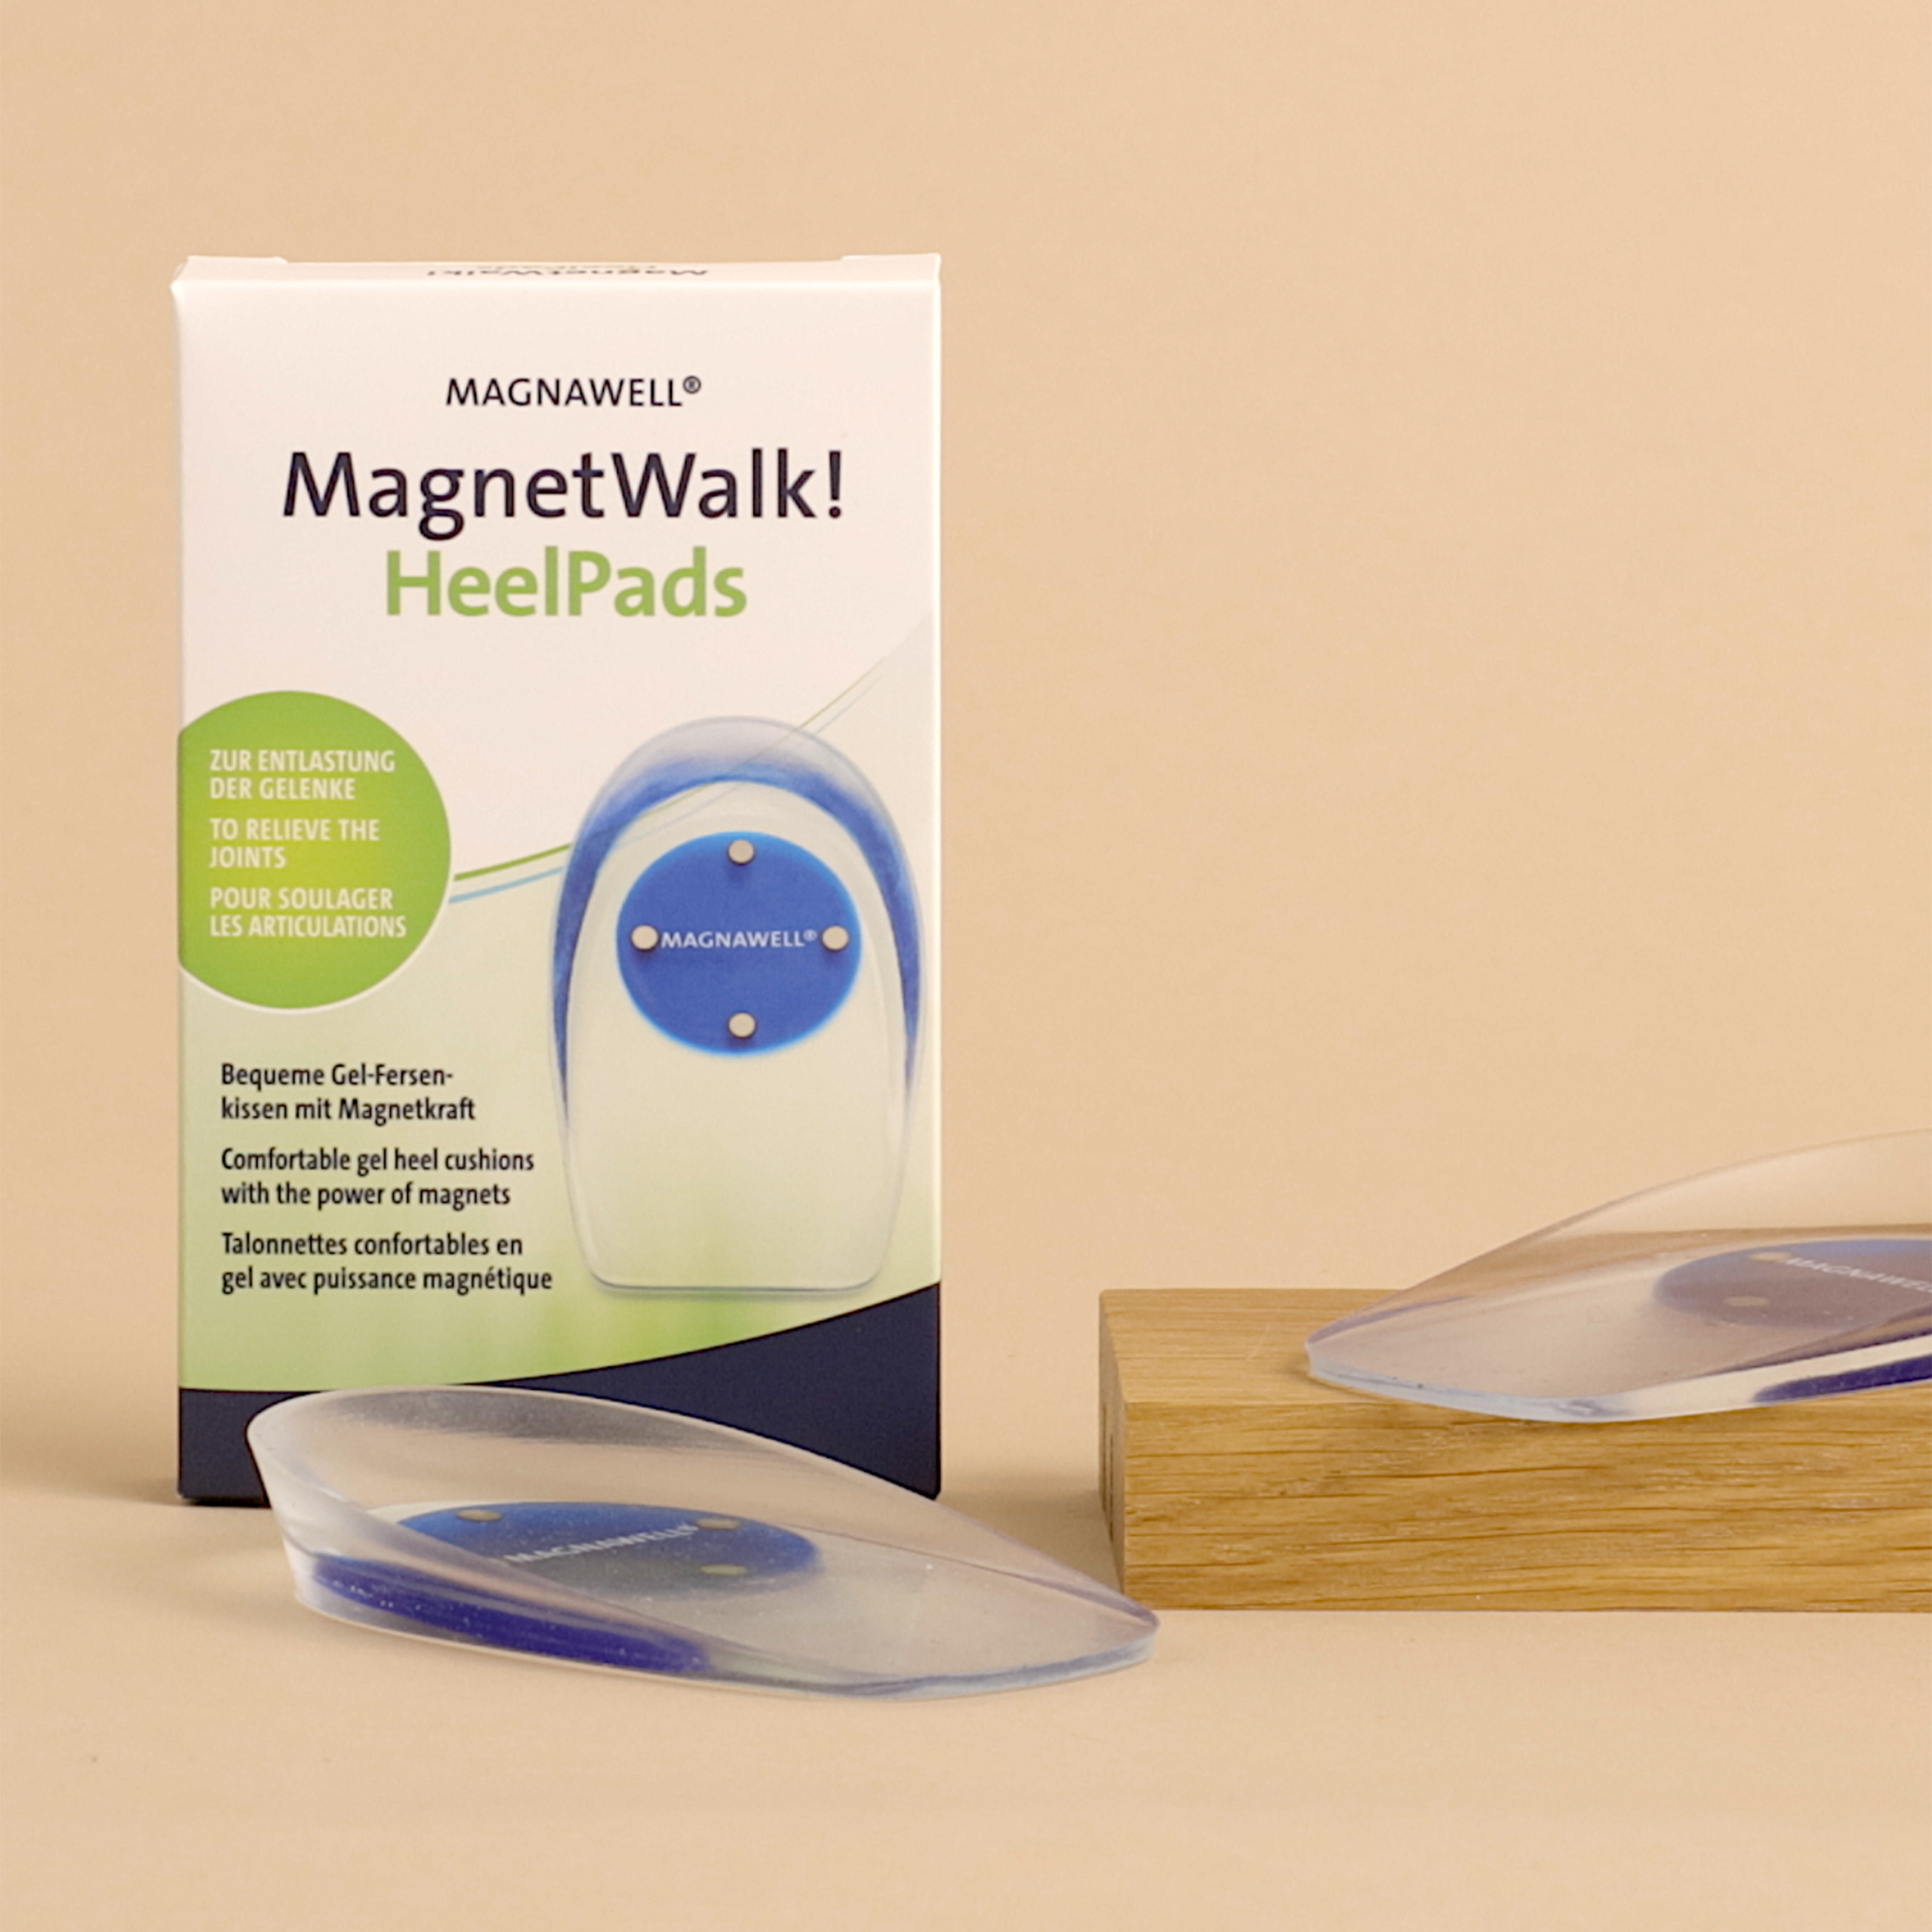 ¡MagnetWalk! HeelPads